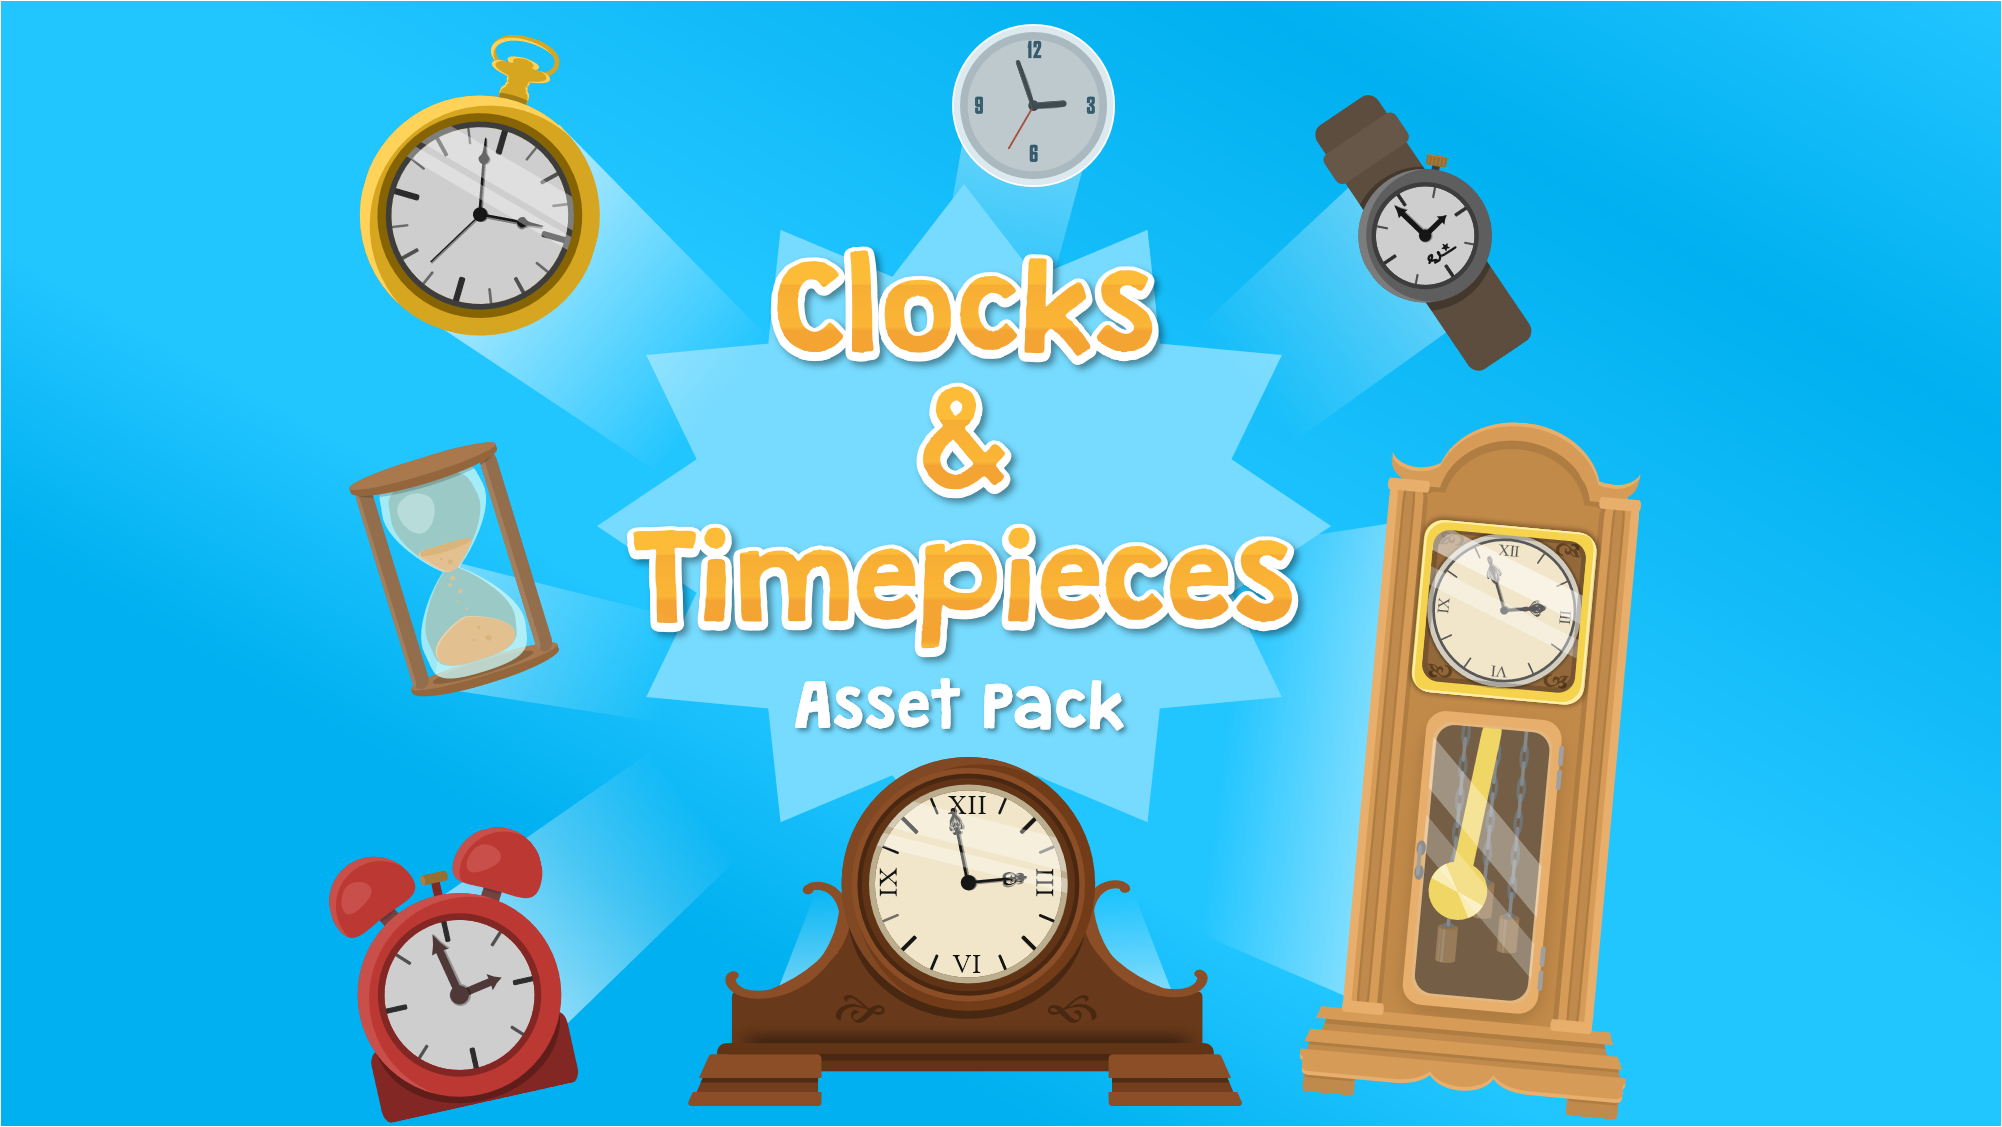 Clocks & Timepieces Asset Pack